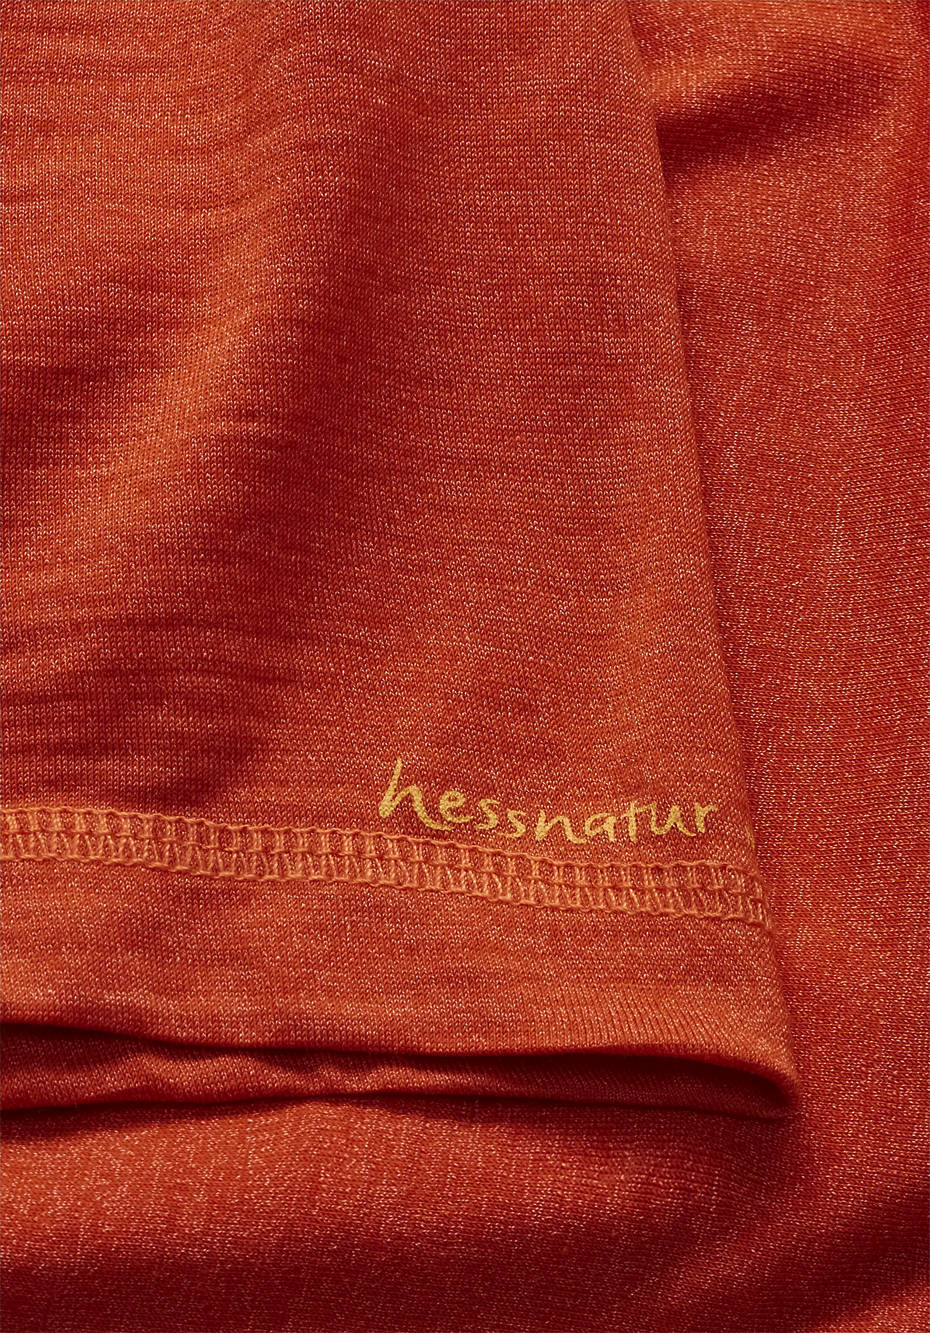 Functional short-sleeved shirt made of organic merino wool with silk